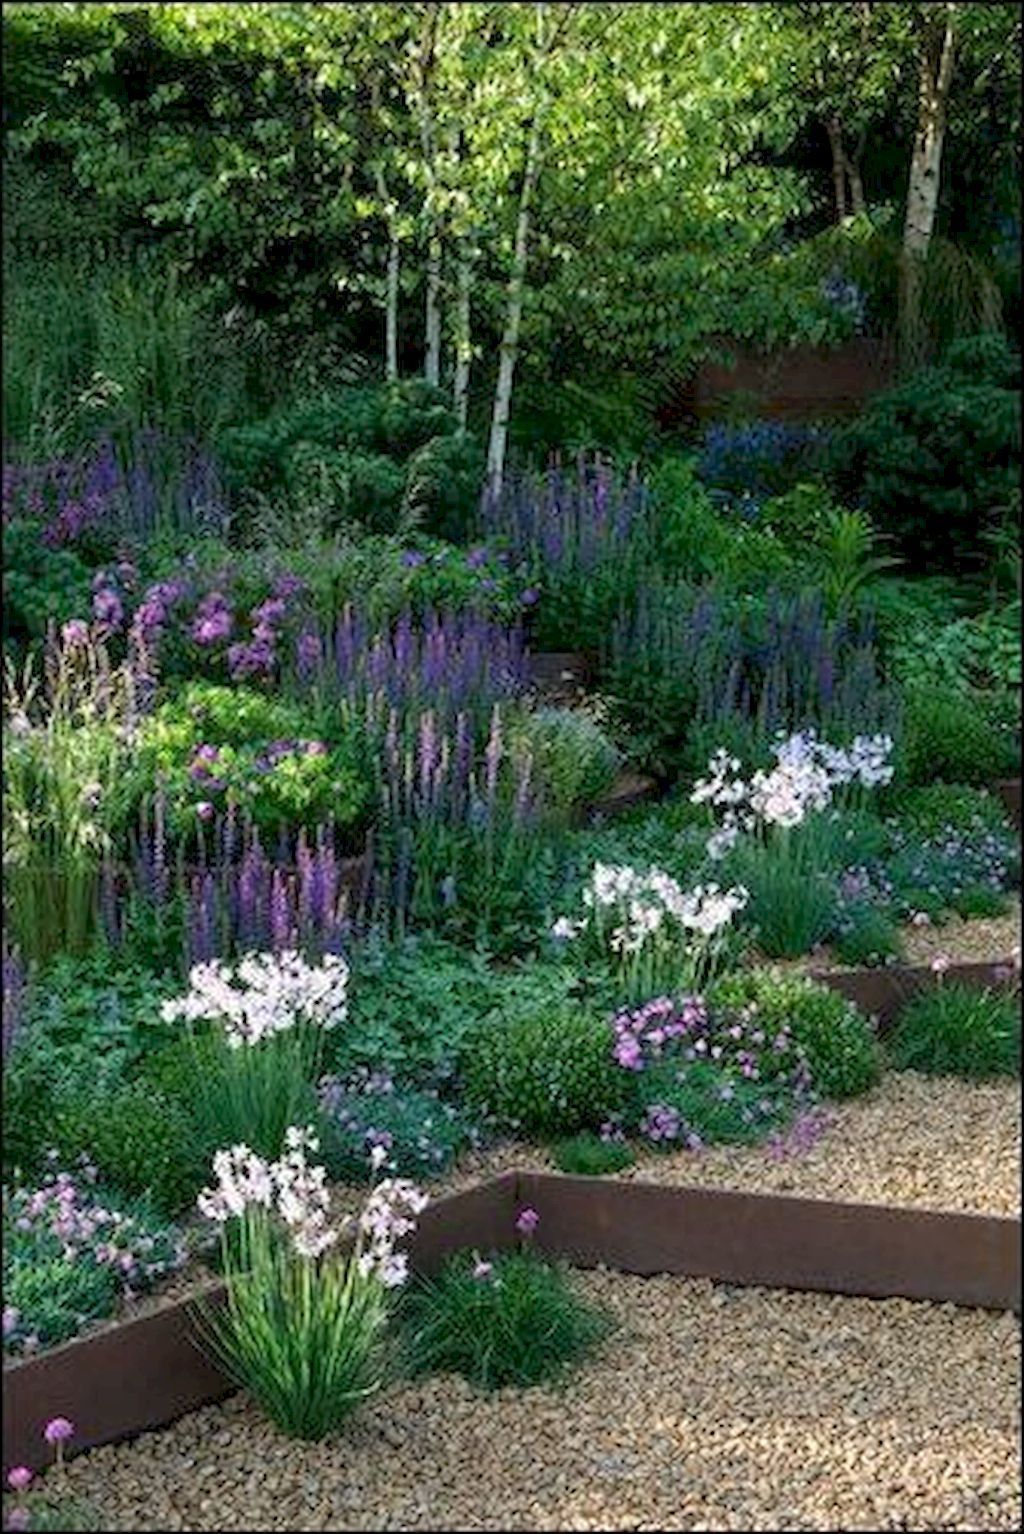 90 Stunning Spring Garden Ideas for Front Yard and Backyard Landscaping -   17 garden design Lighting interiors ideas